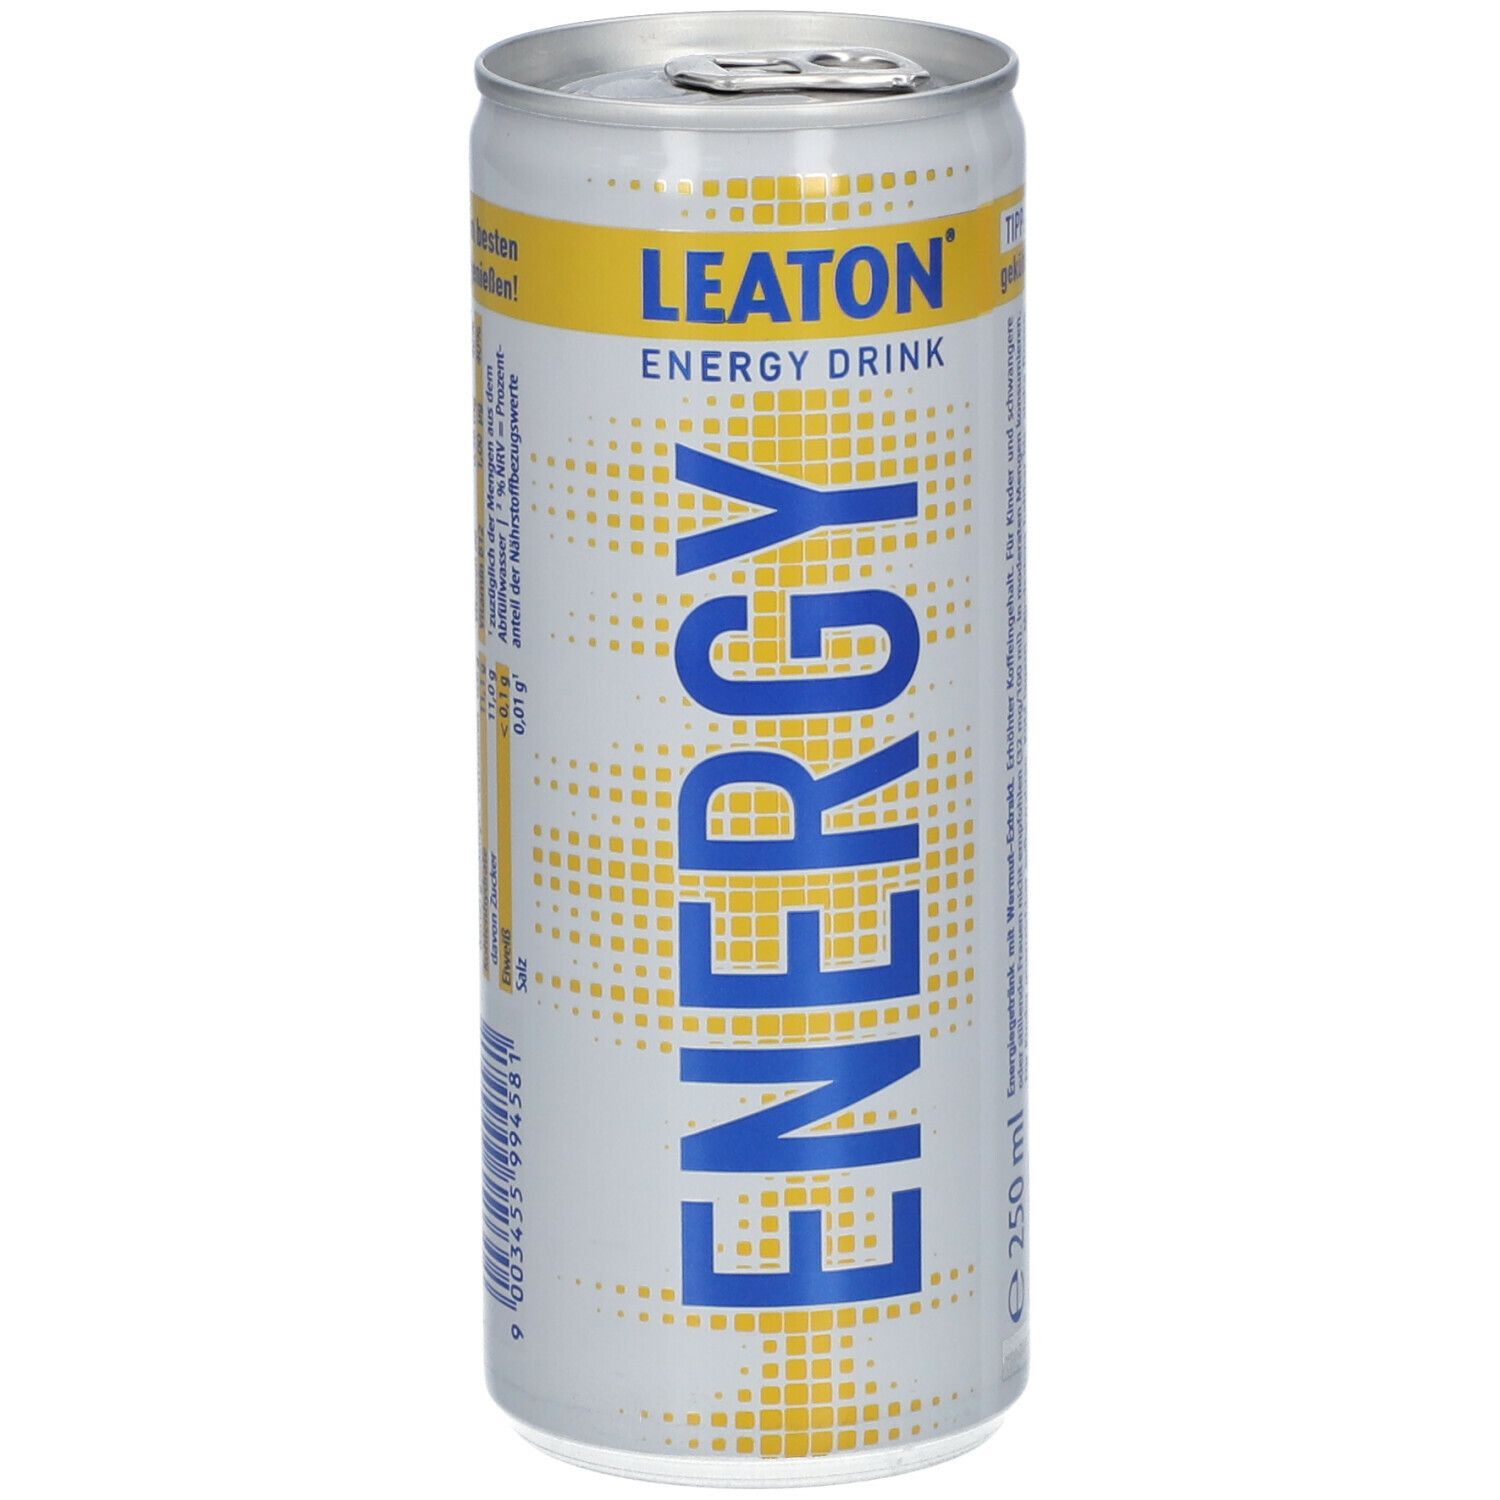 LEATON Energydrink